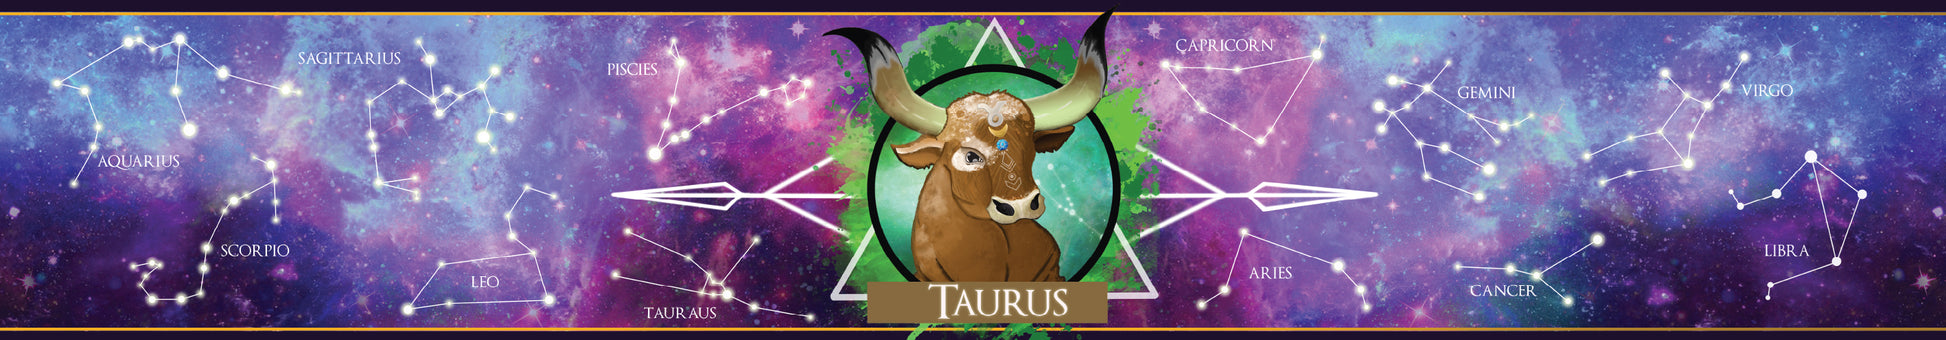 Taurus zodiac star sign scented candle label design | Happy Piranha.